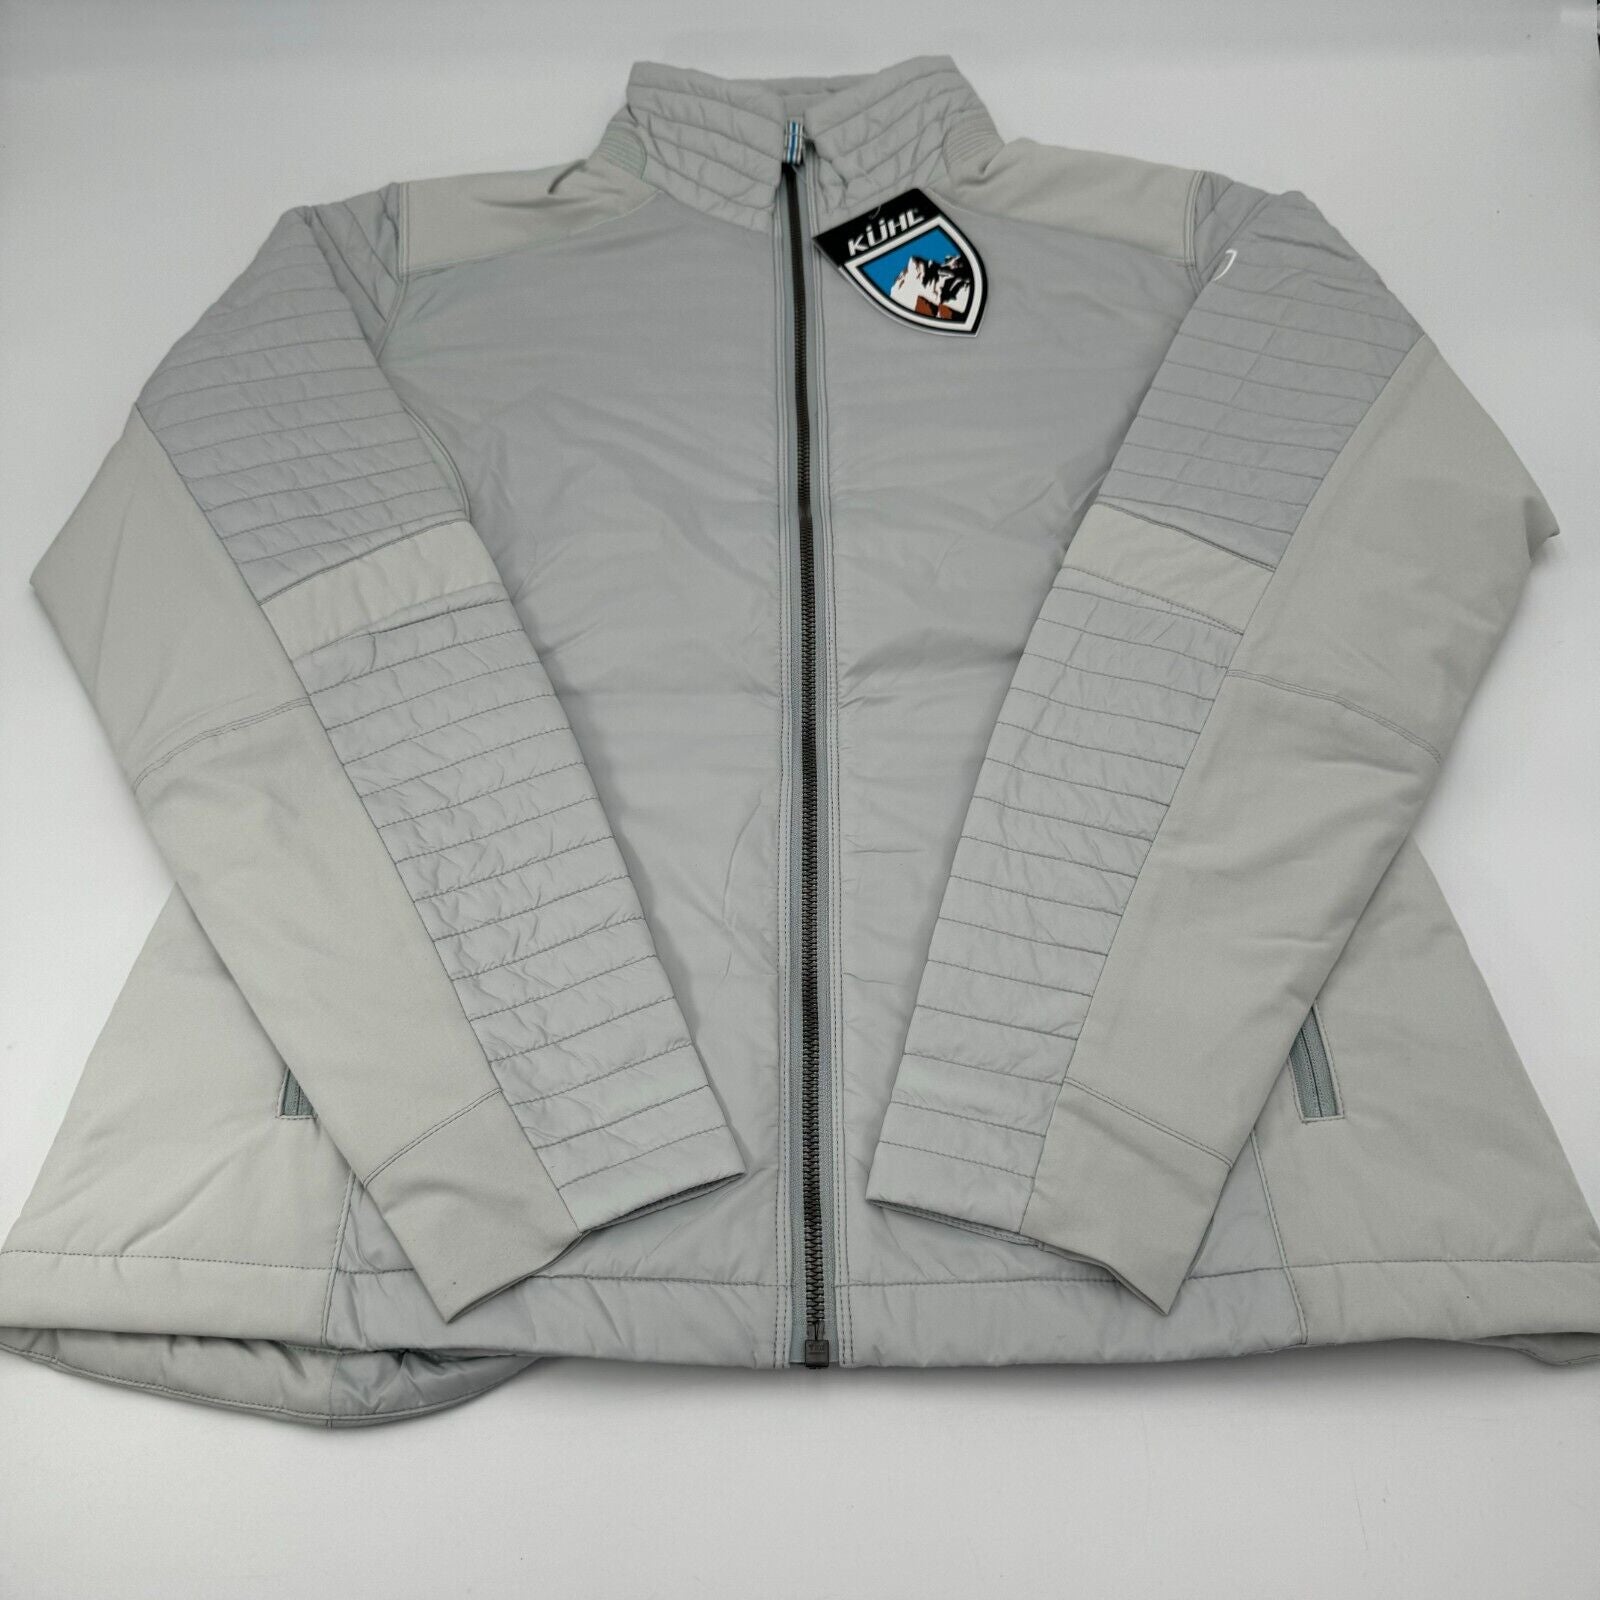 KUHL Women's Firefly Jacket White Lightweight Insulated Womens Size M - NWT